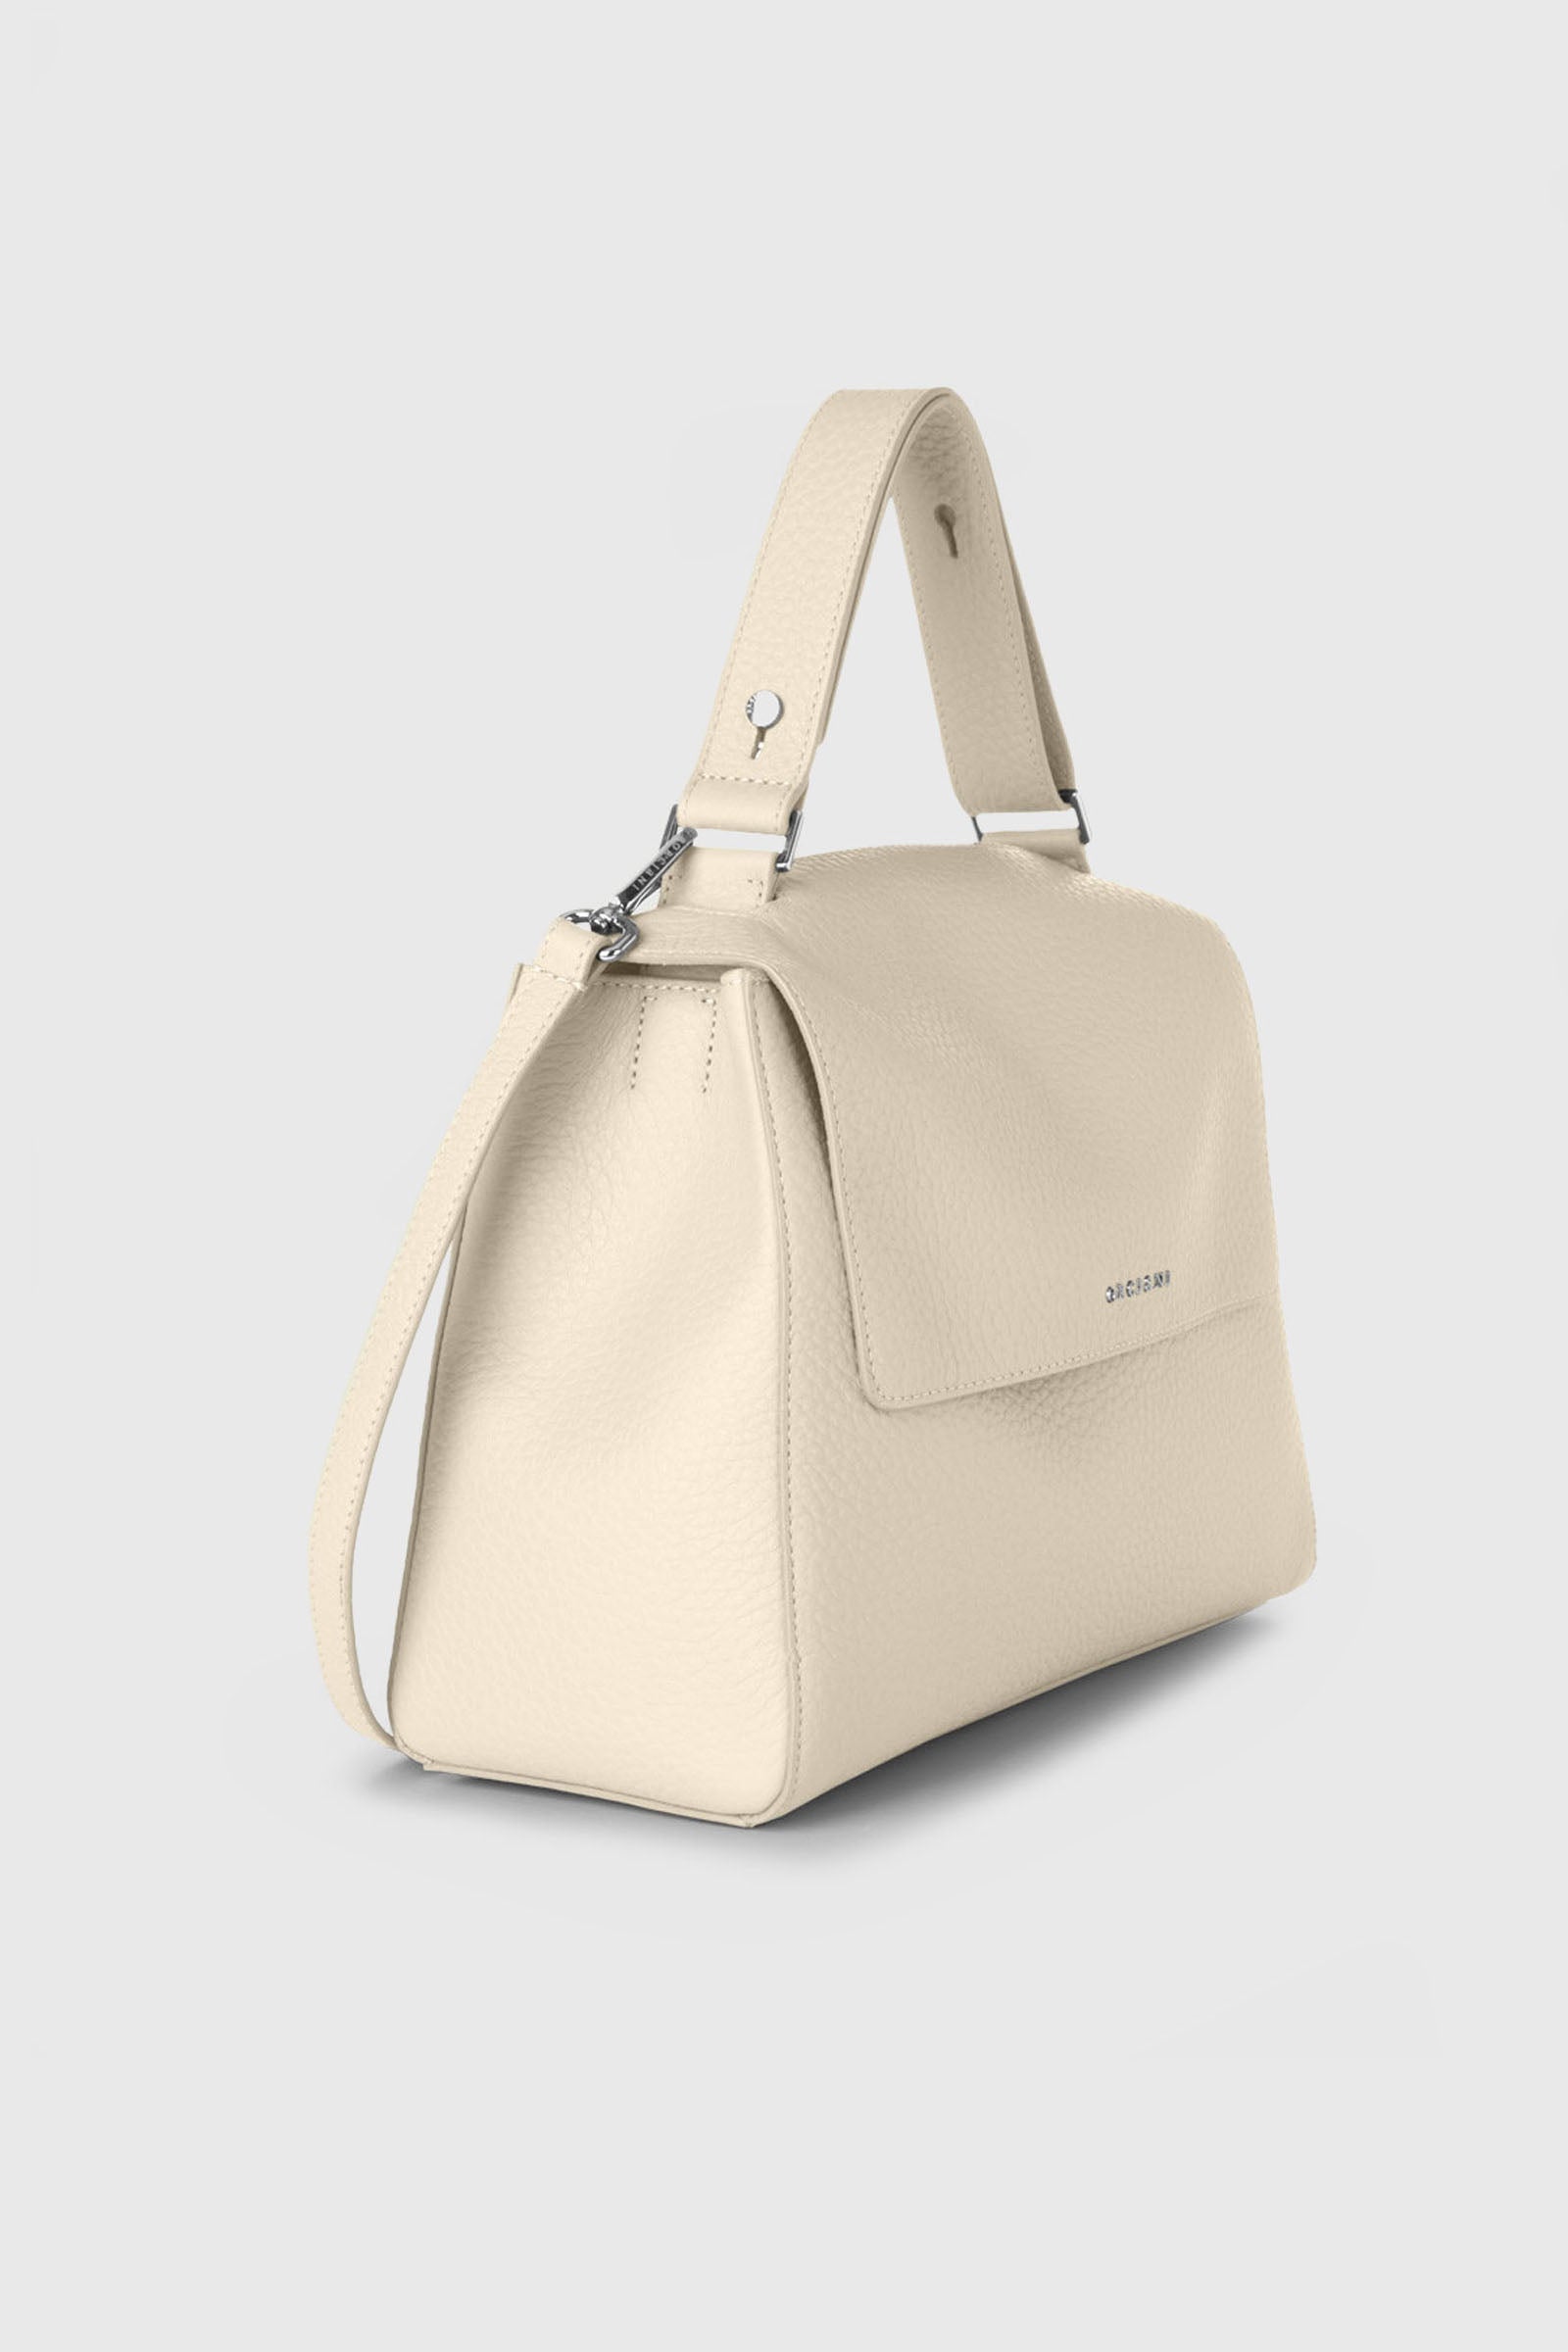 Orciani Medium Sveva Handbag in Ivory Leather - 2